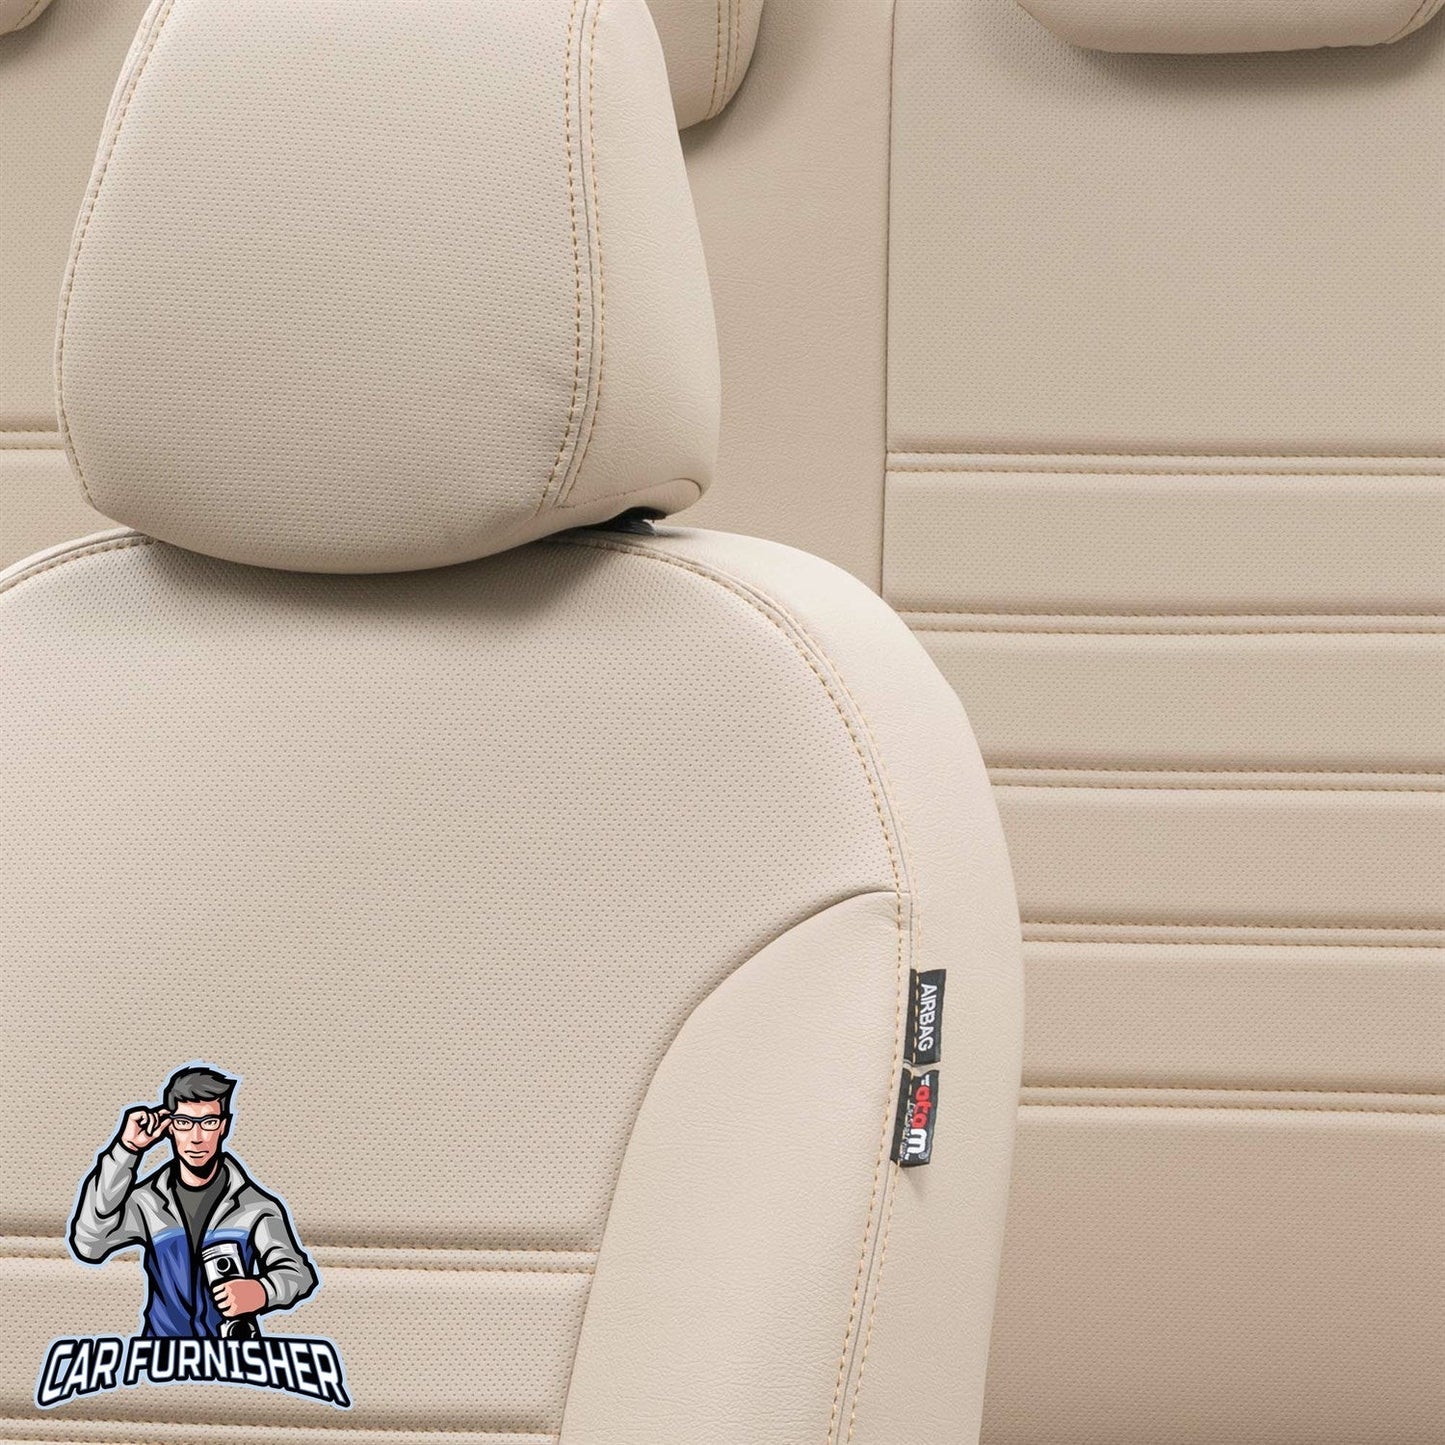 Hyundai Elantra Seat Covers Istanbul Leather Design Beige Leather